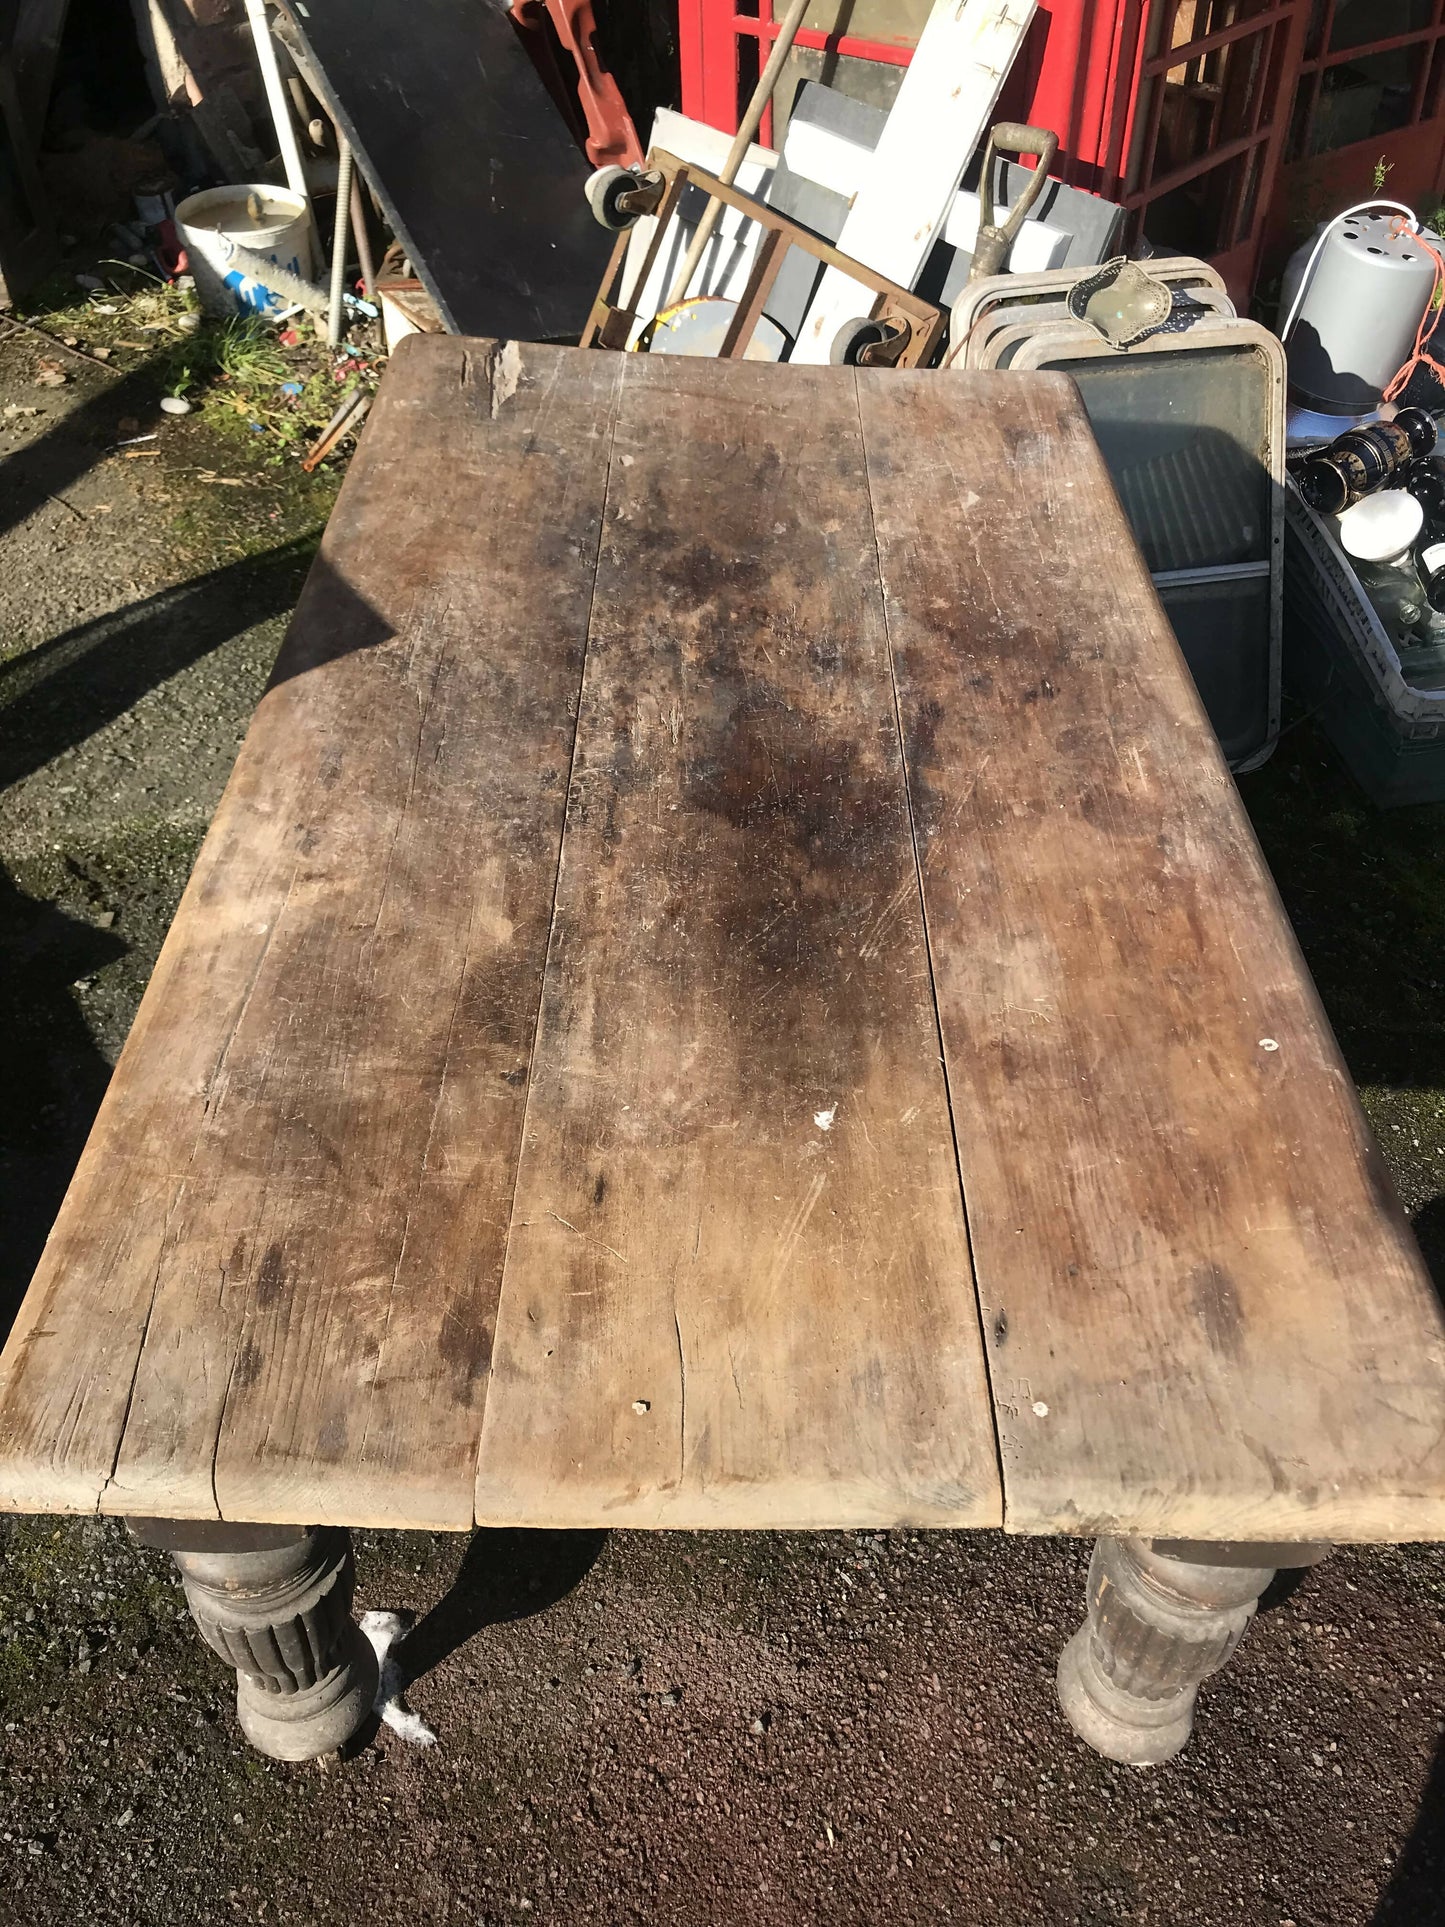 Old rustic farm table